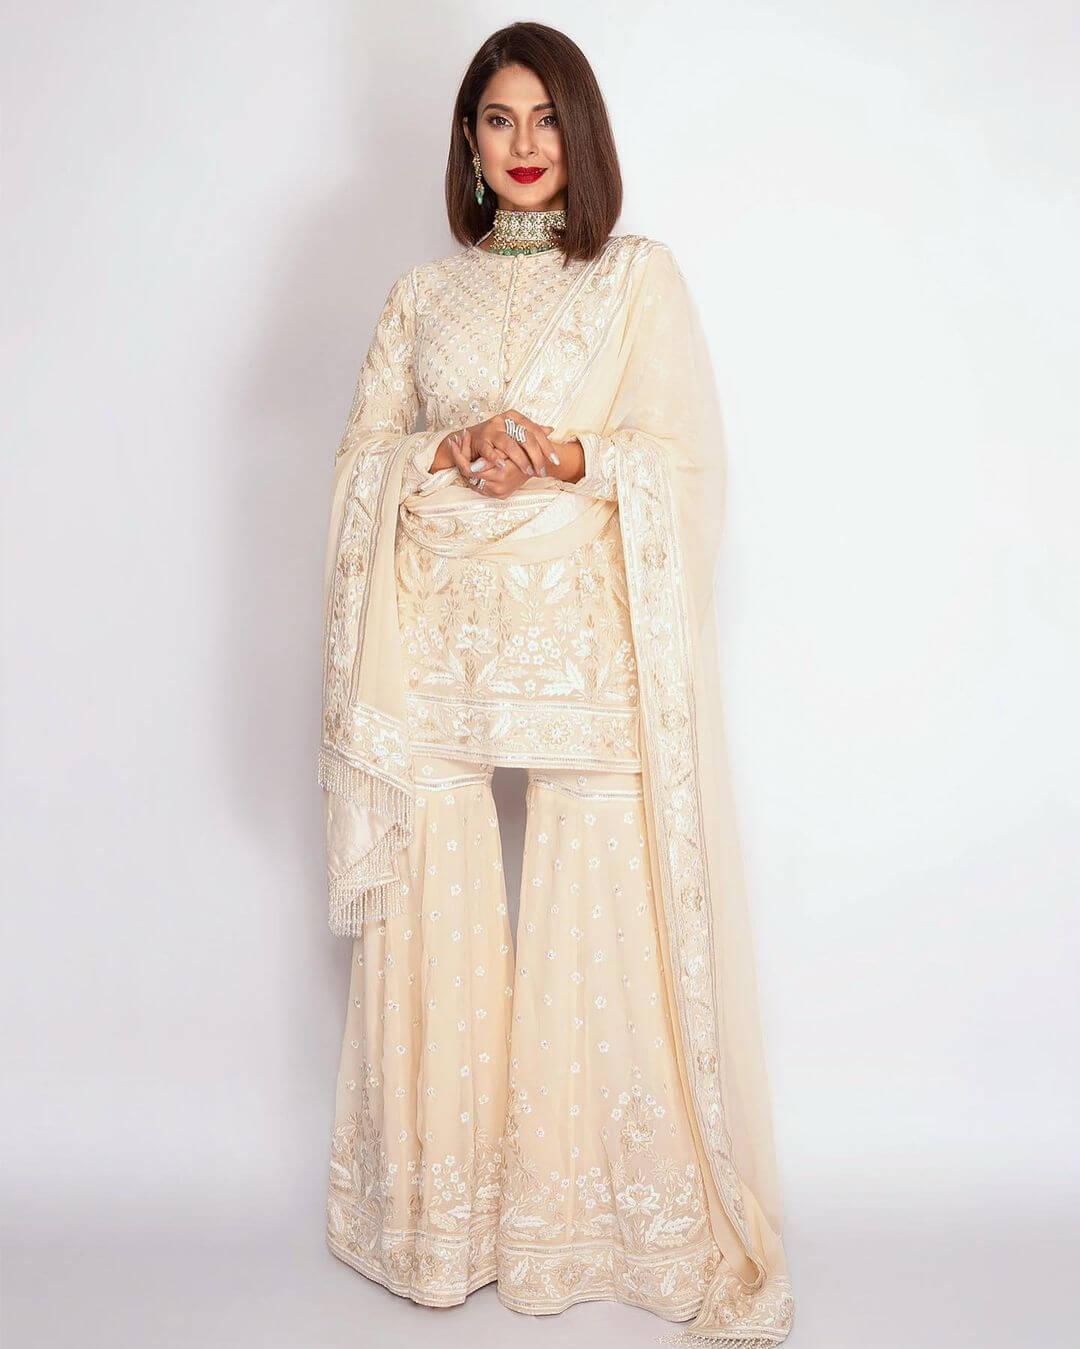 Desi Kudi Jennifer Winget Look Drop Dead Gorgeous In Off White Embellished Sharara Set